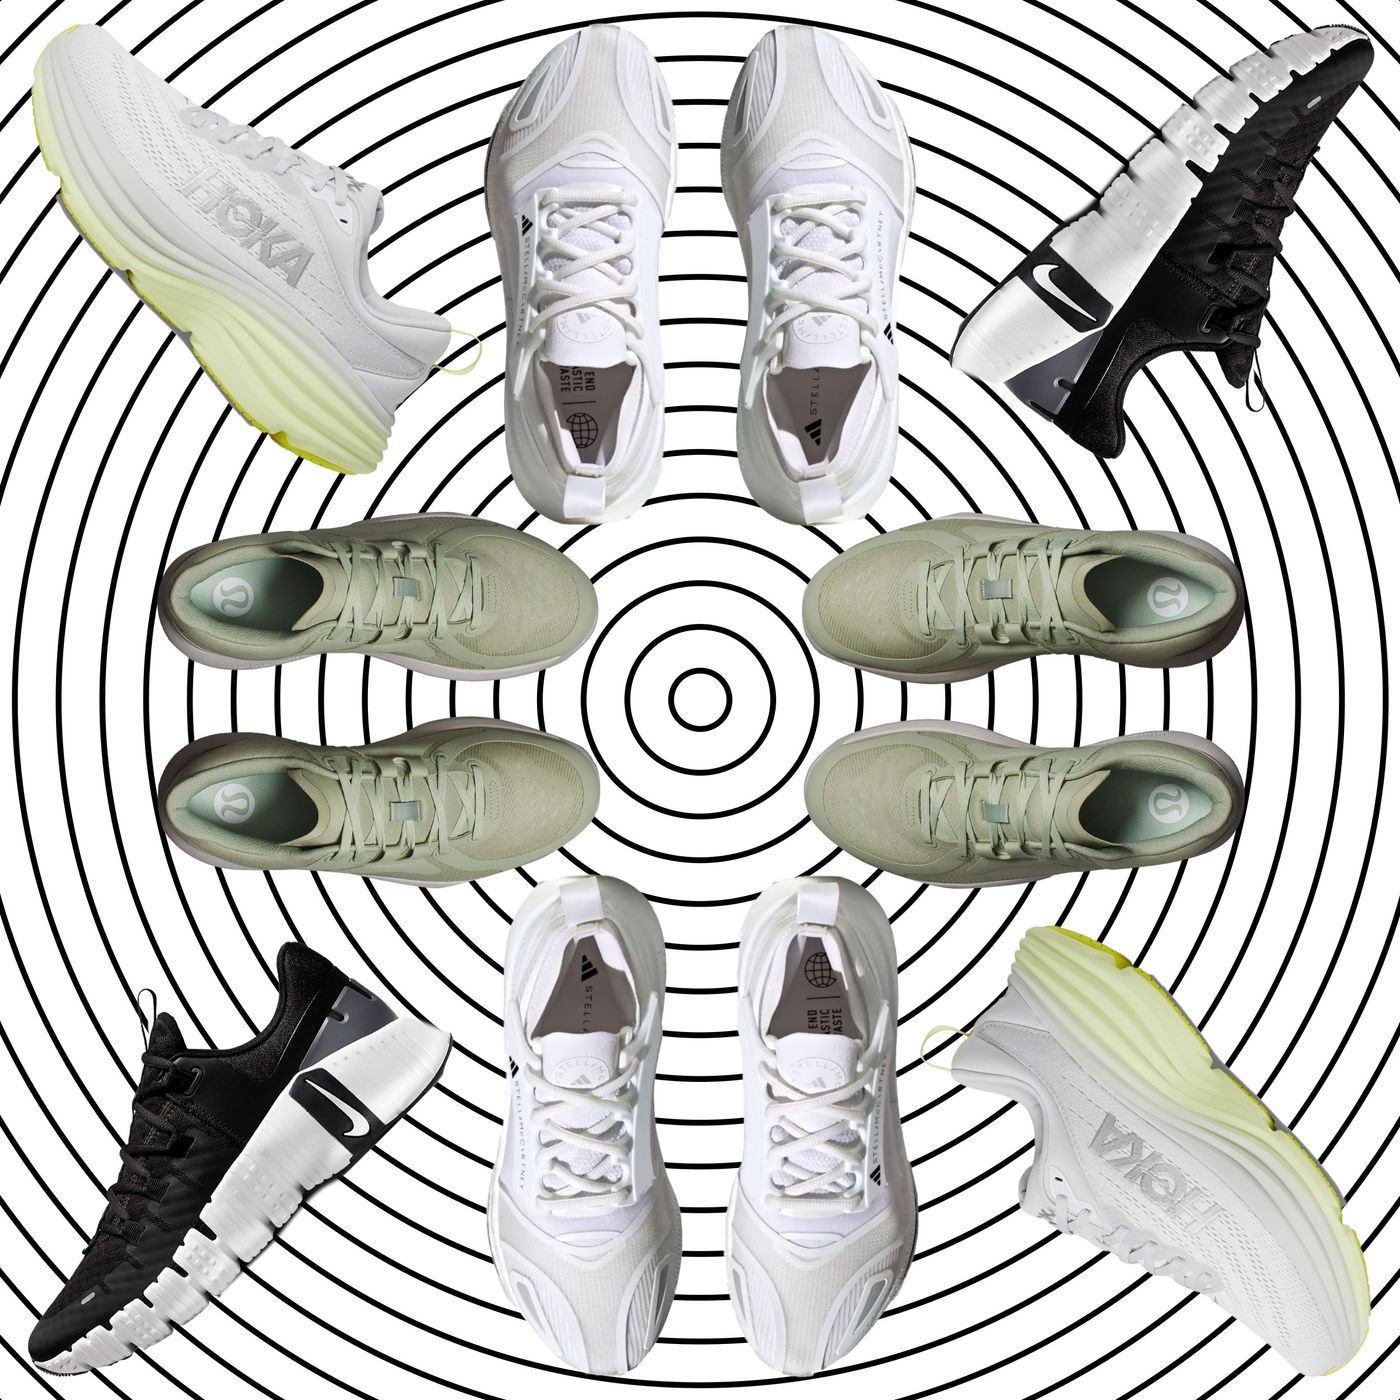 The CRAZIEST Shoe of 2020?! Adidas YEEZY FOAM RUNNER Review & On Feet 